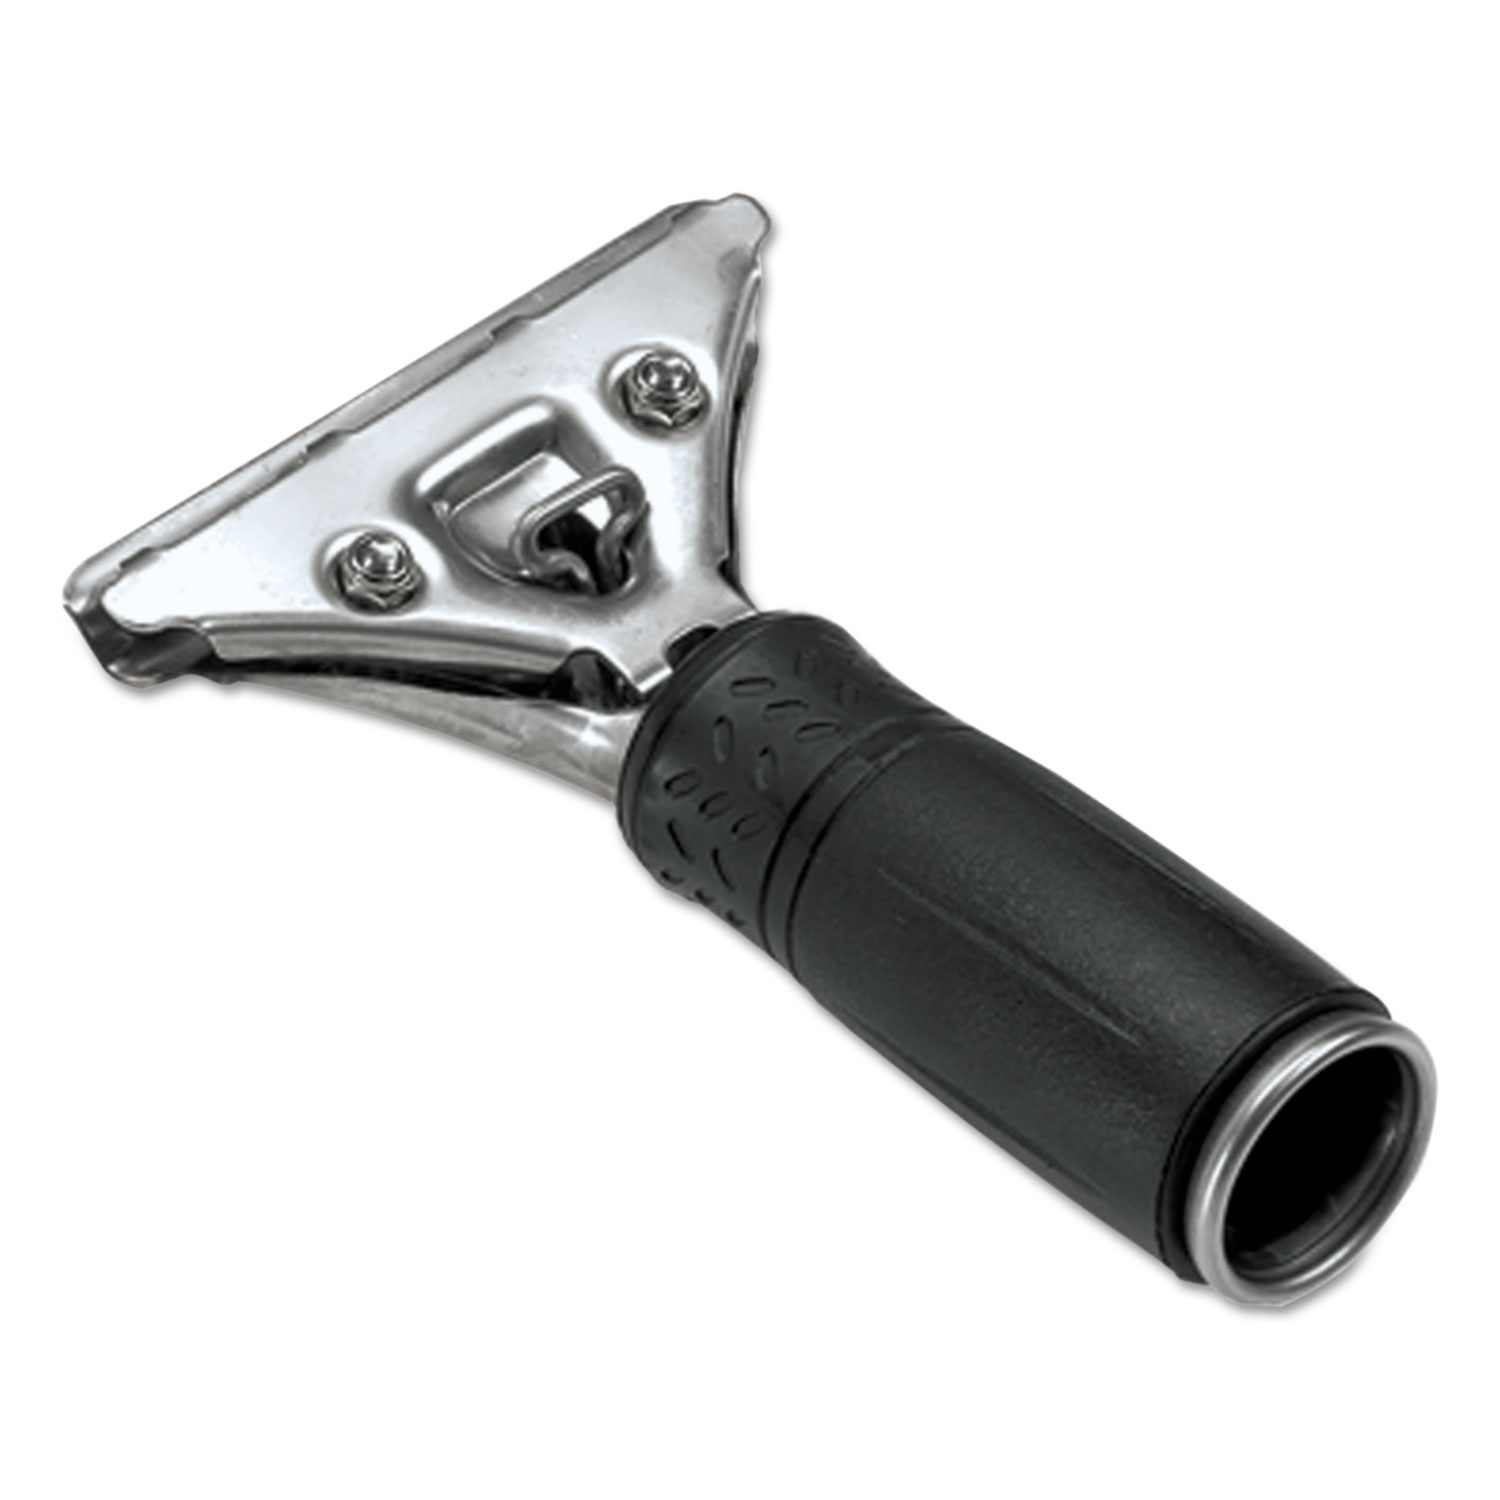  Unger PR000 Pro Stainless Steel Squeegee Handle, Rubber Grip, Black/Steel, Screw Clamp (UNGPR00) 